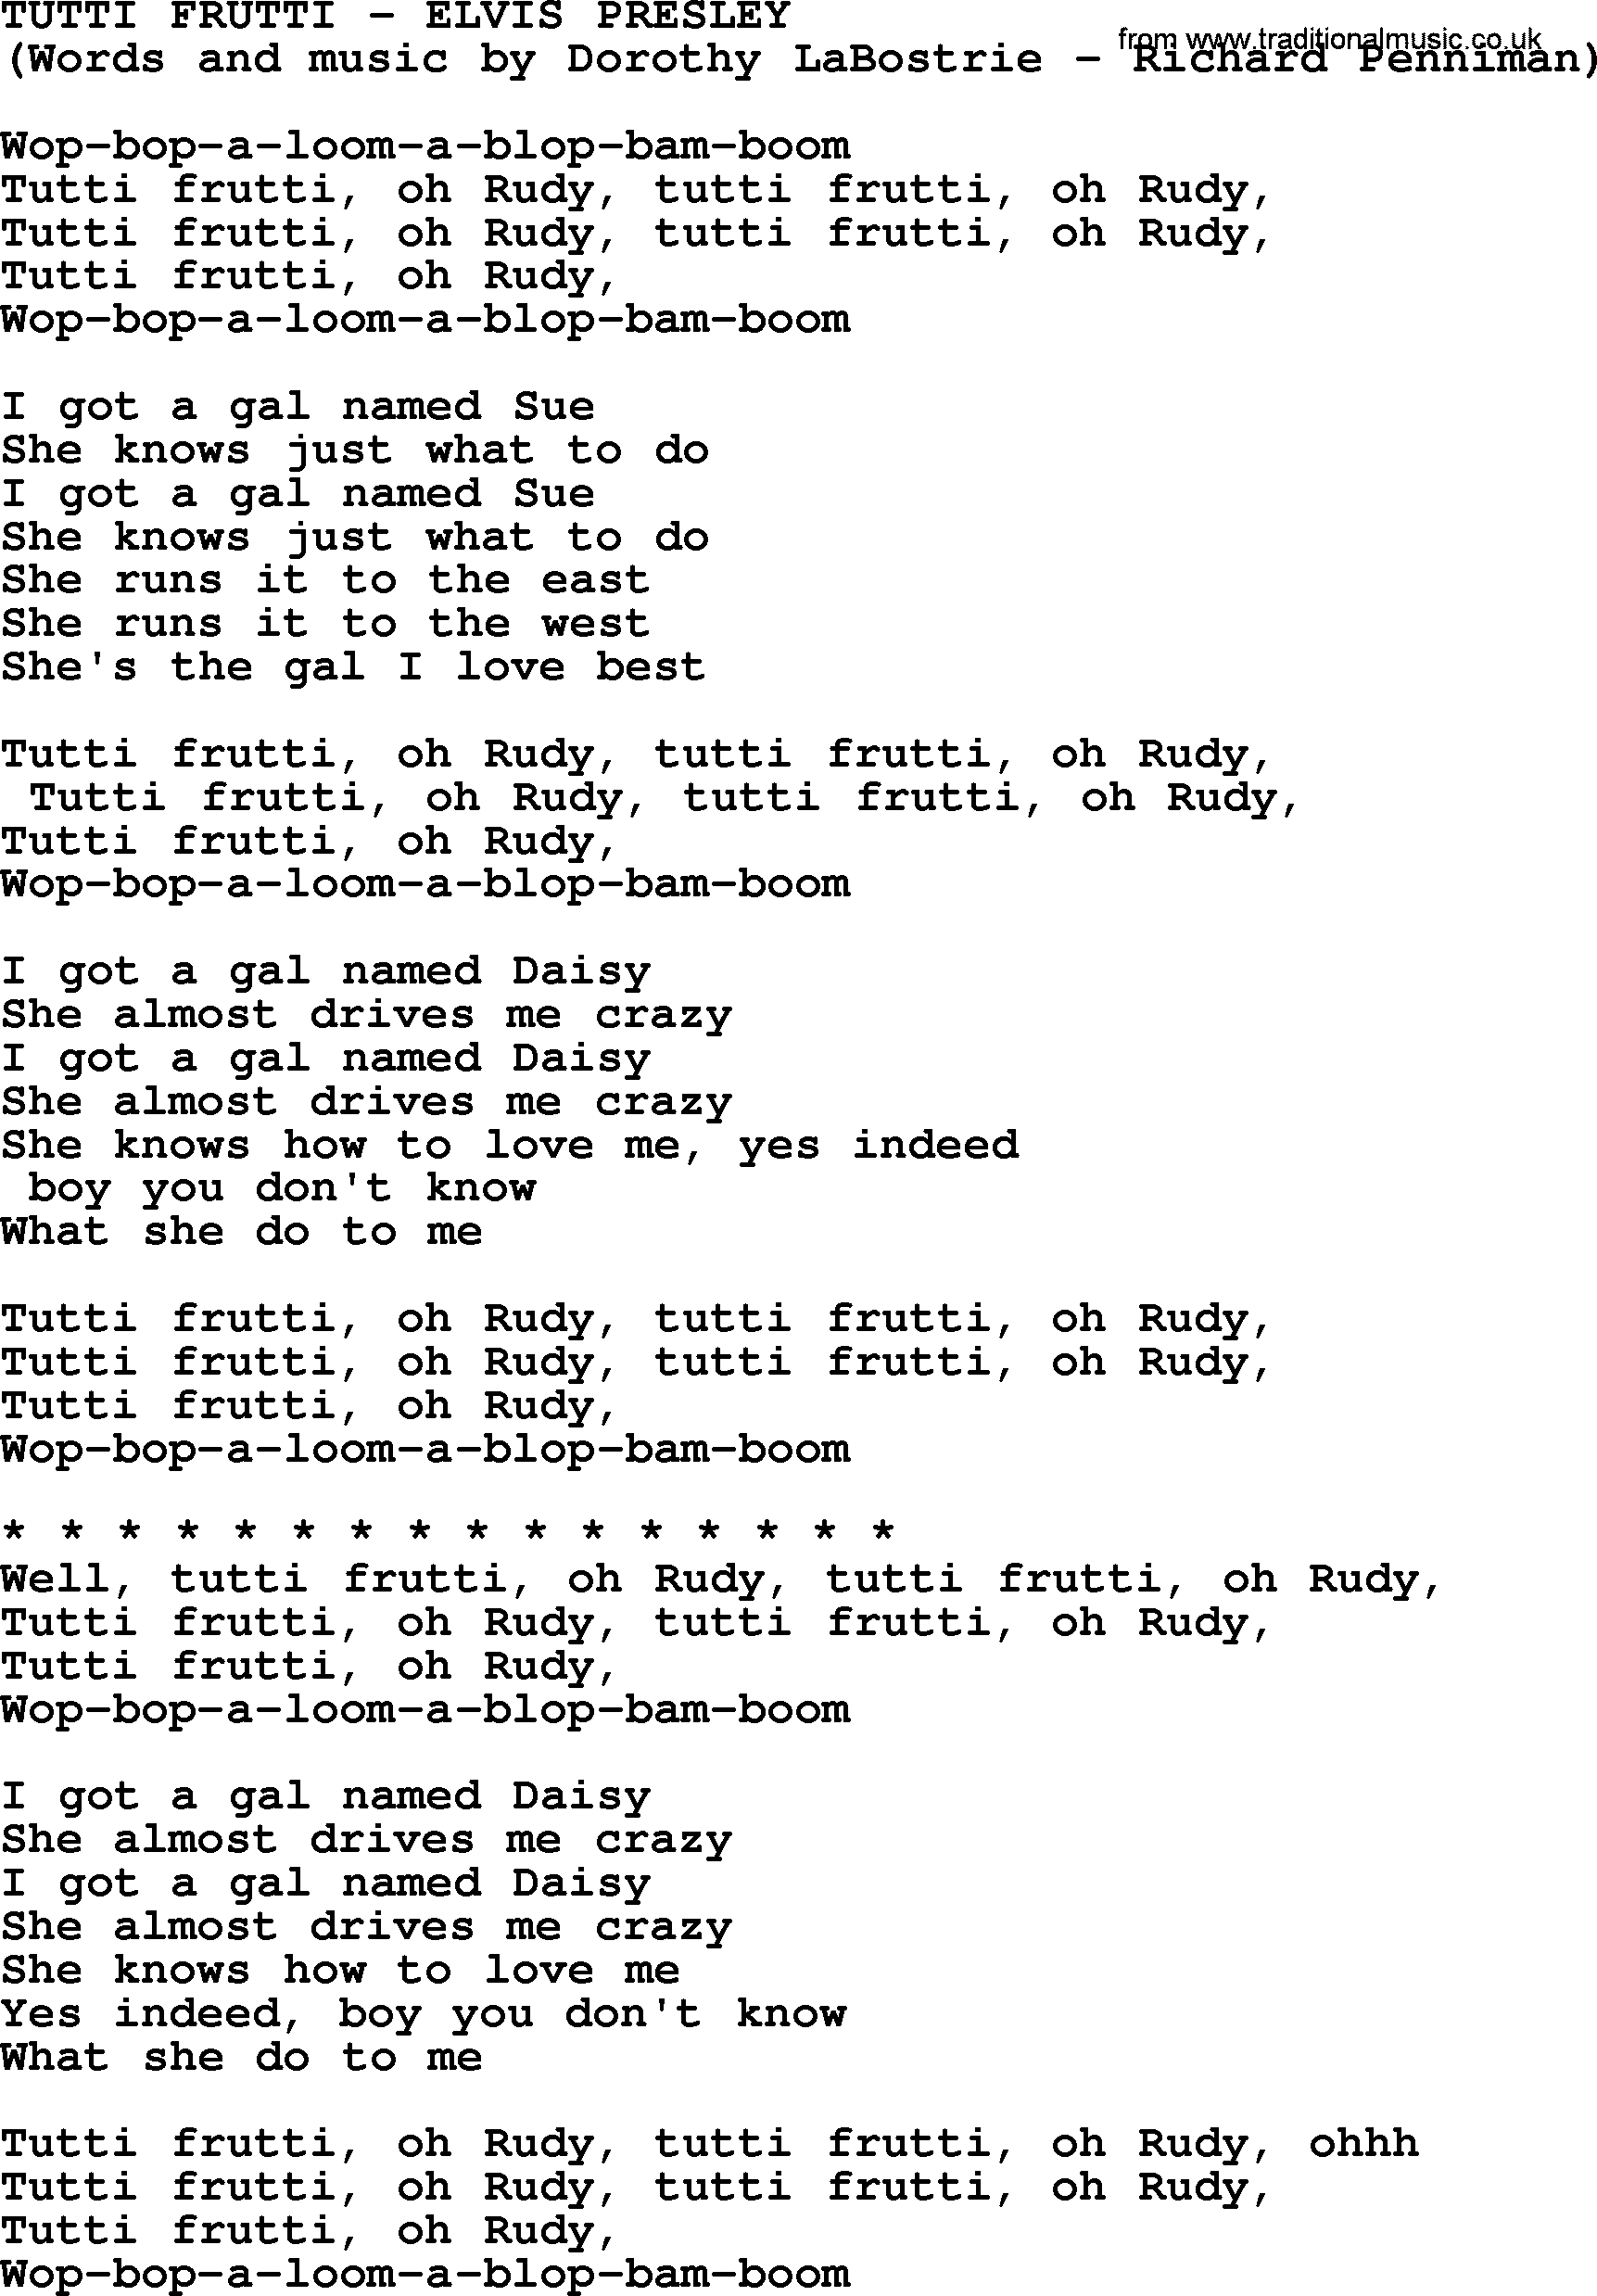 Elvis Presley song: Tutti Frutti lyrics